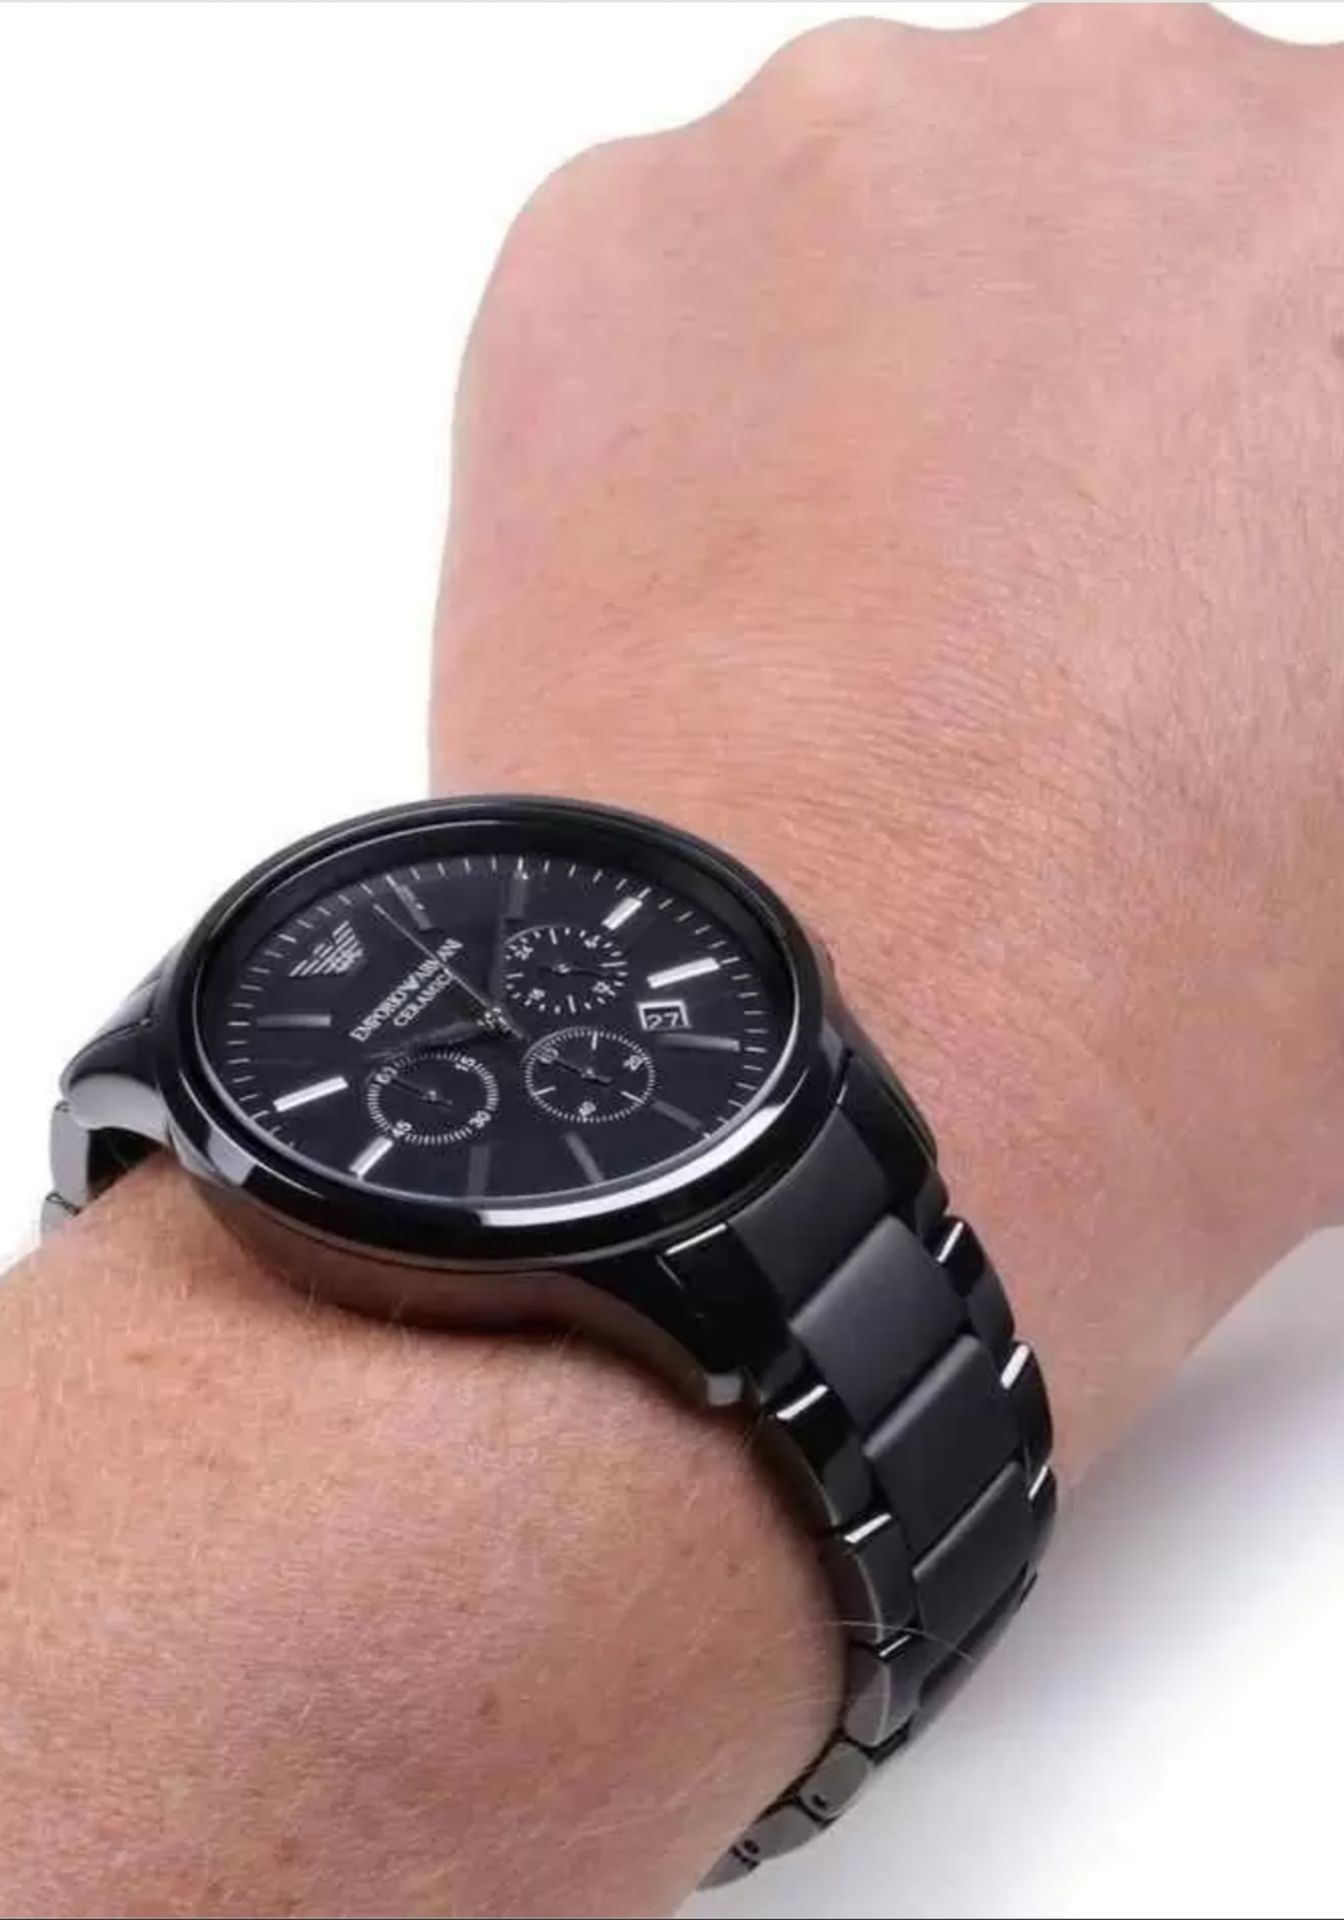 Emporio Armani AR1451 Men's Ceramica Black Ceramic Bracelet Quartz Chronograph Watch - Image 5 of 7